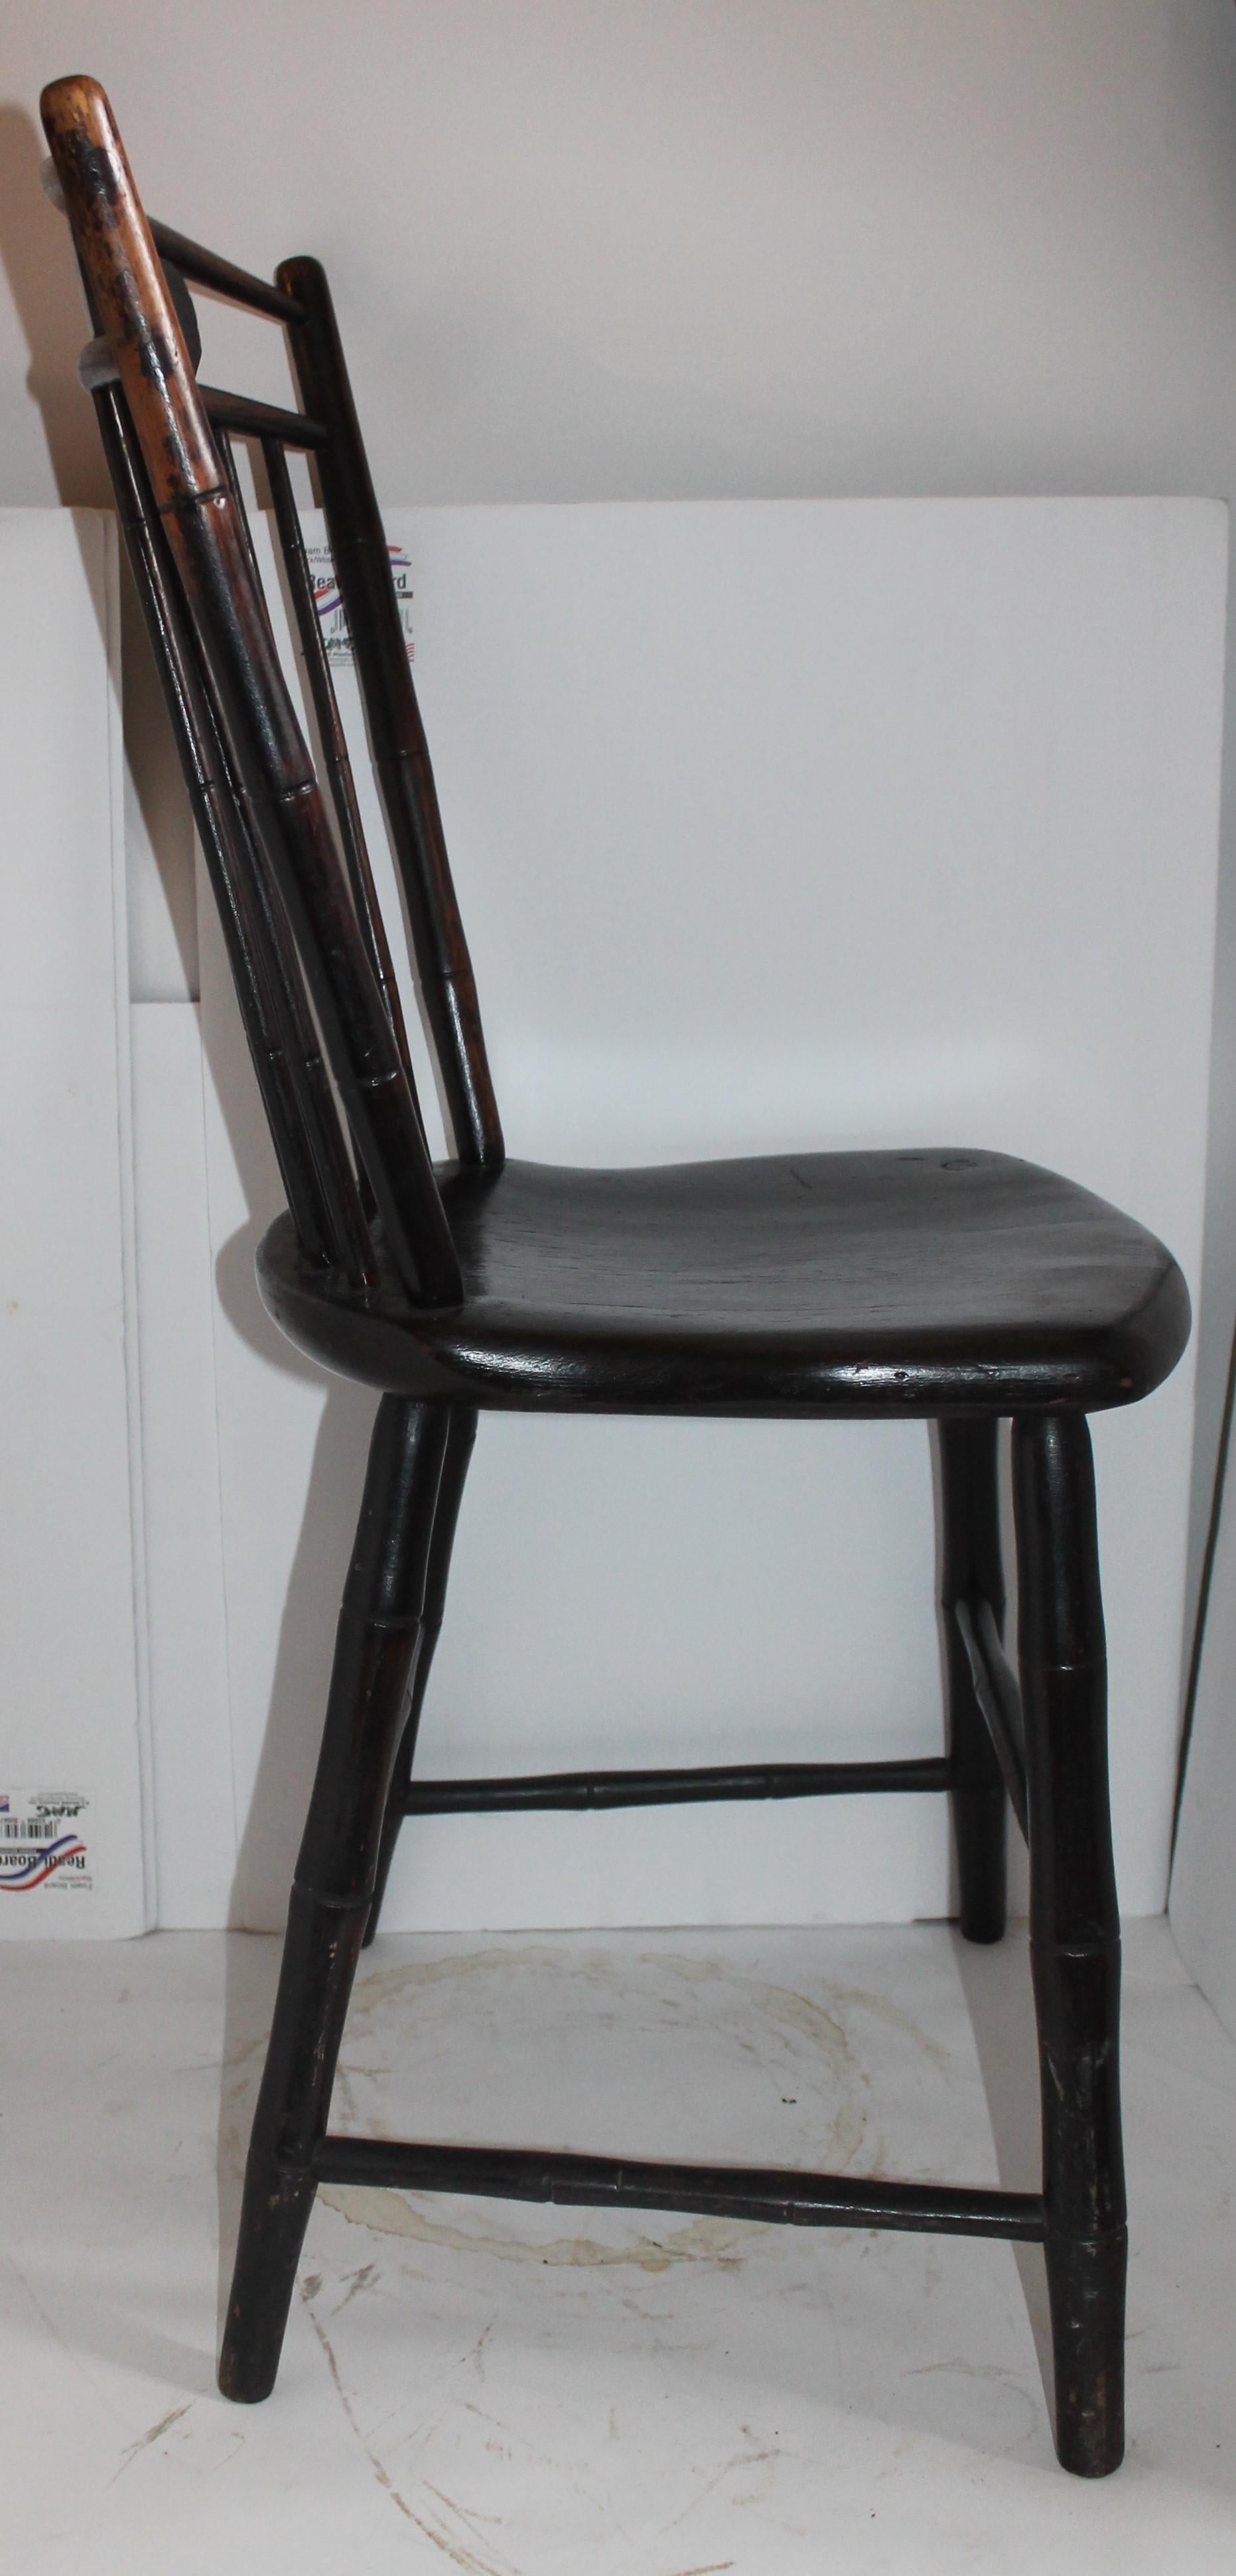 original windsor chair